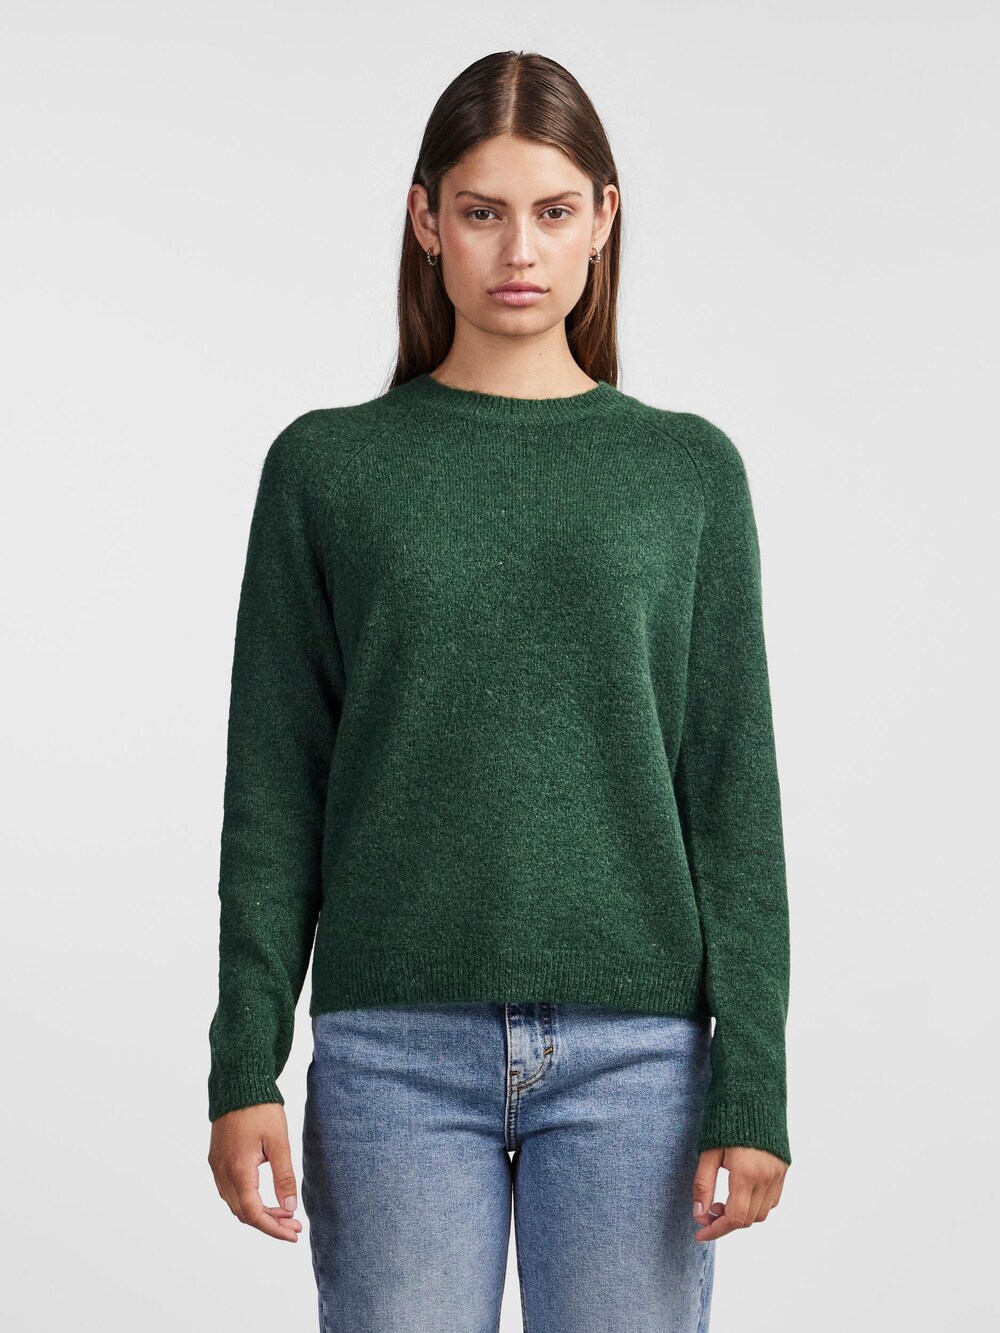 Свитер PIECES Juliana, темно-зеленый свитер pieces juliana пестрый коричневый